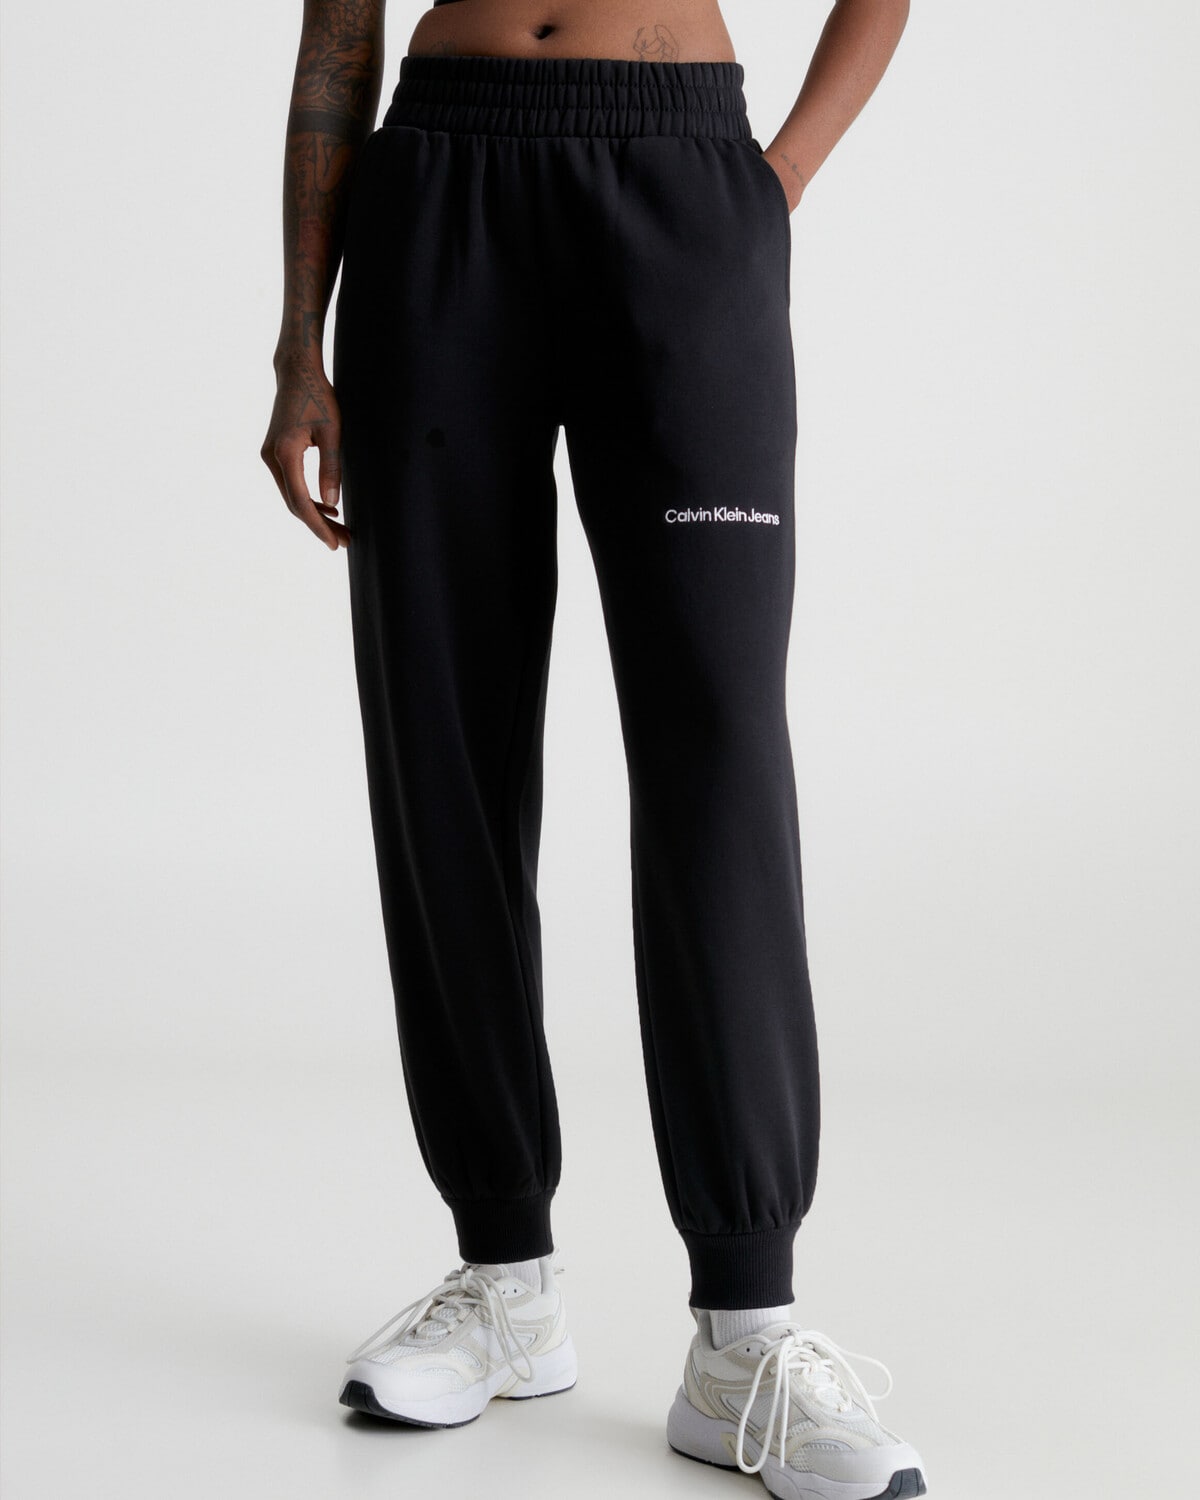 Calvin Klein Fleece Athletic Pants for Women | Mercari